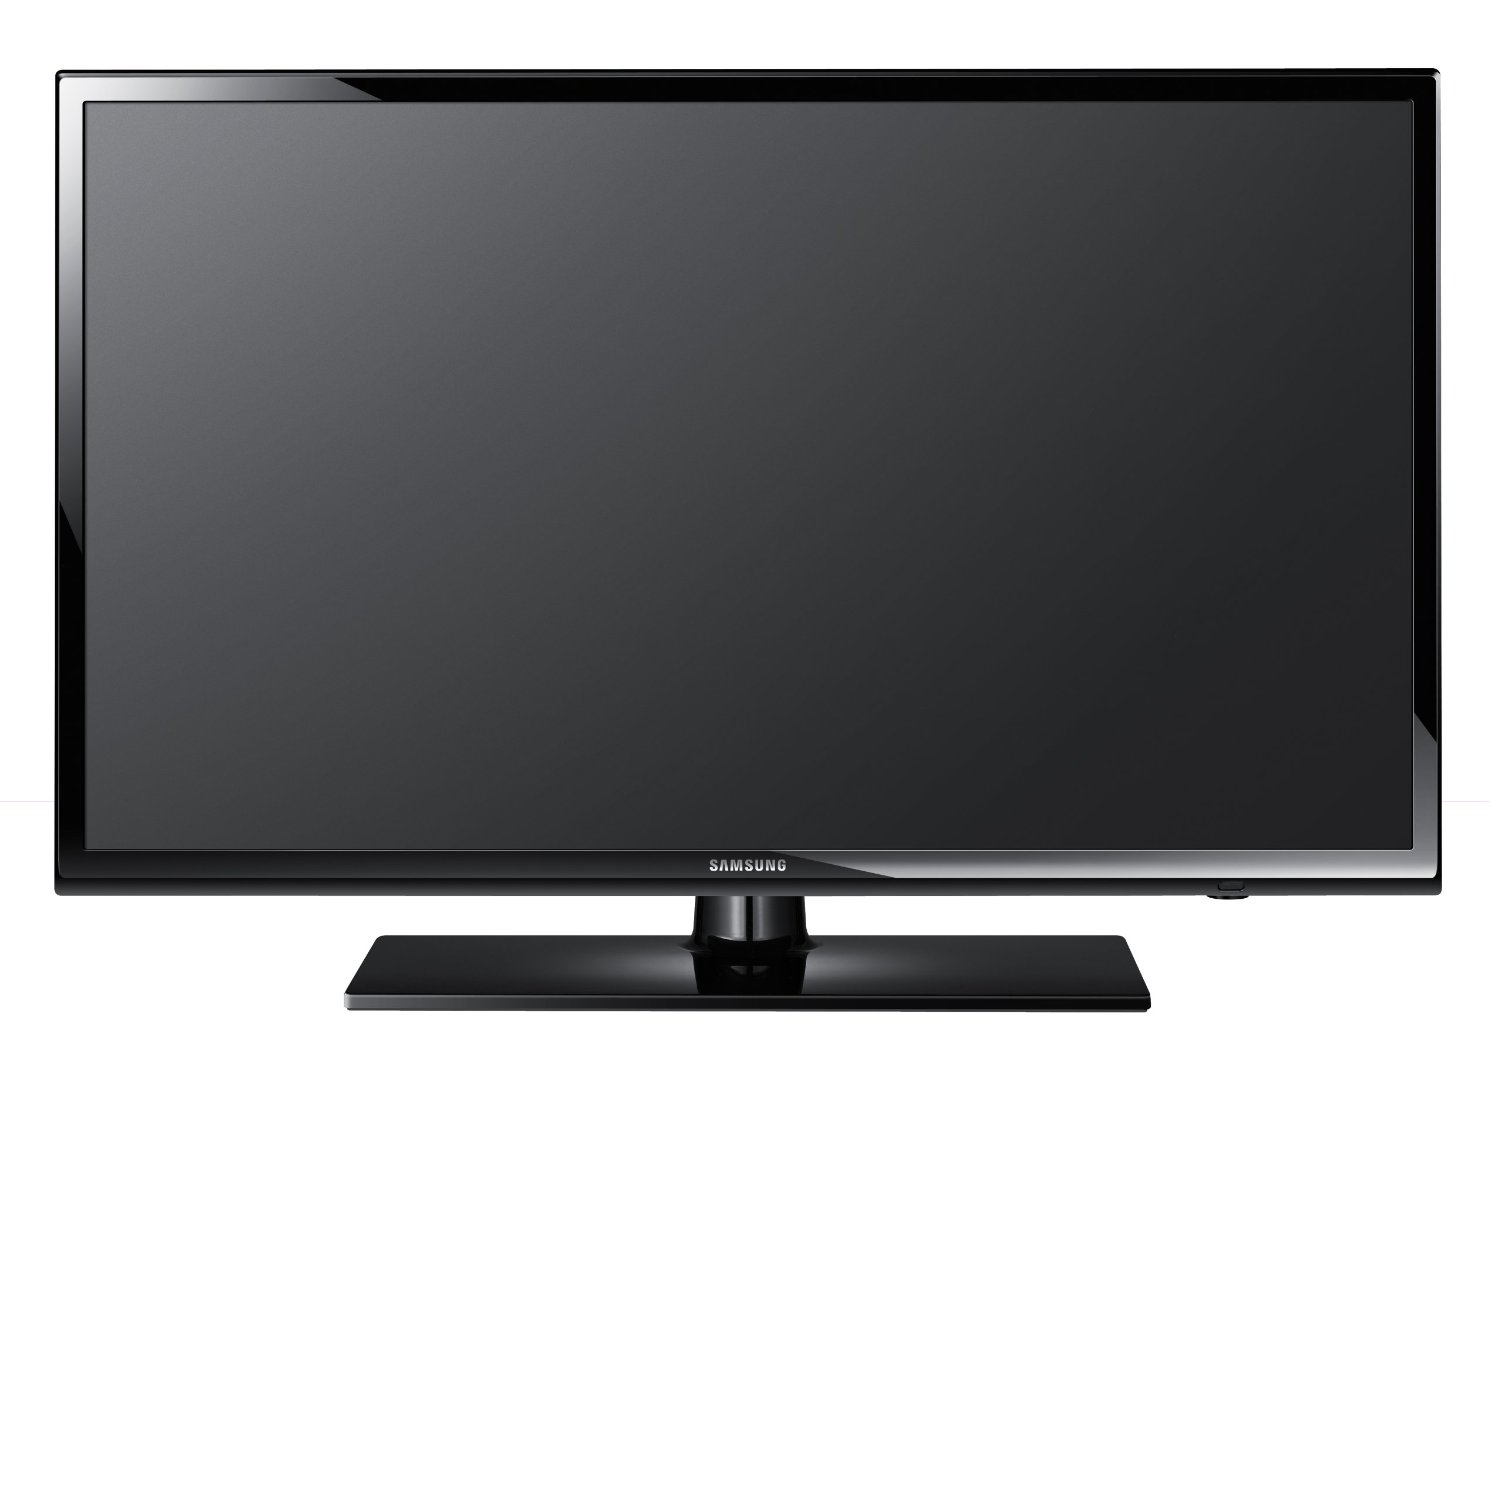 Samsung UN60FH6200FXZA 60-Inch 120 Hz 1080p LED Smart HDTV (Black) (2013 Model)